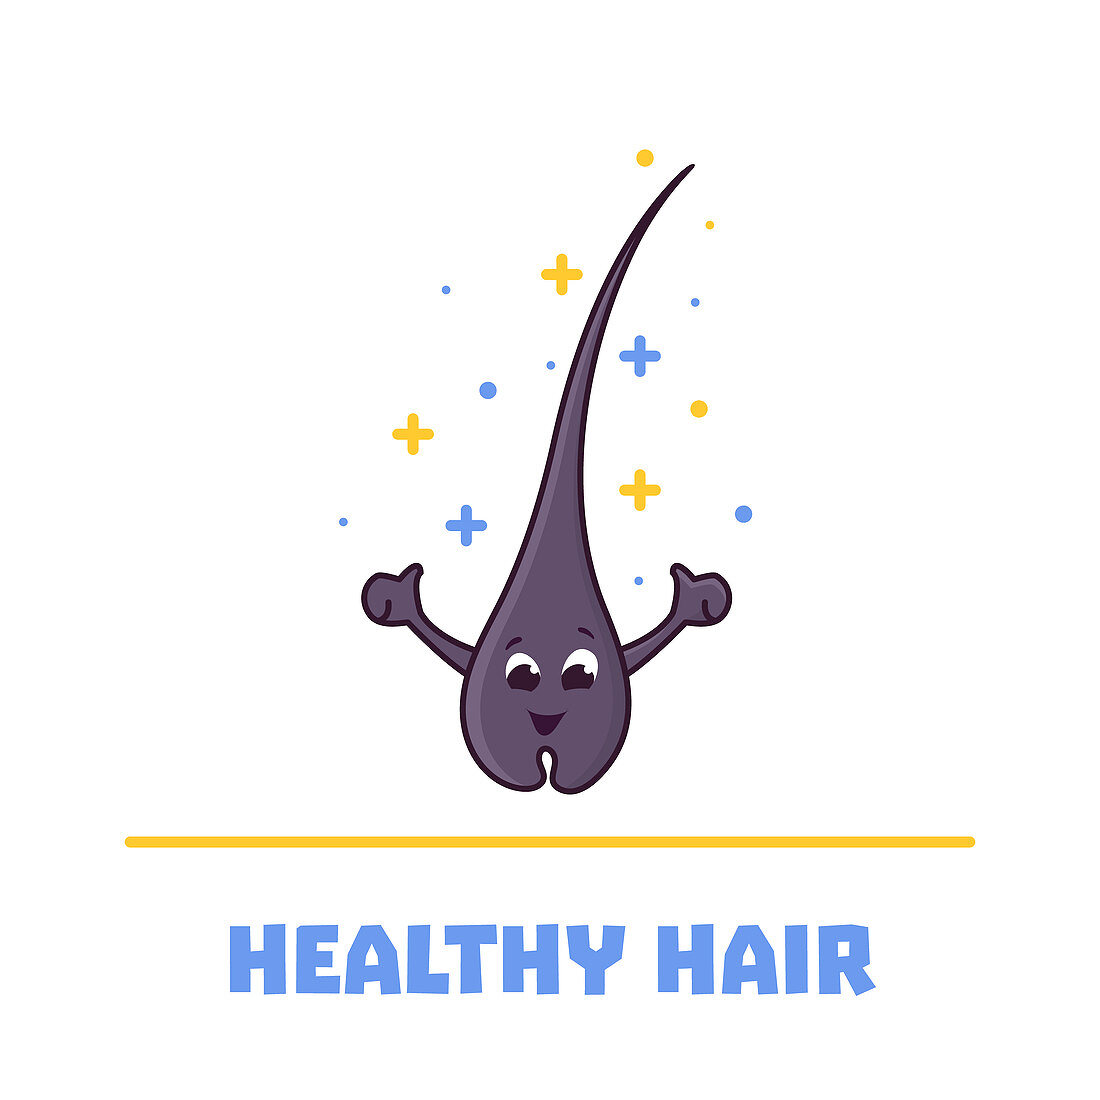 Healthy hair, conceptual illustration